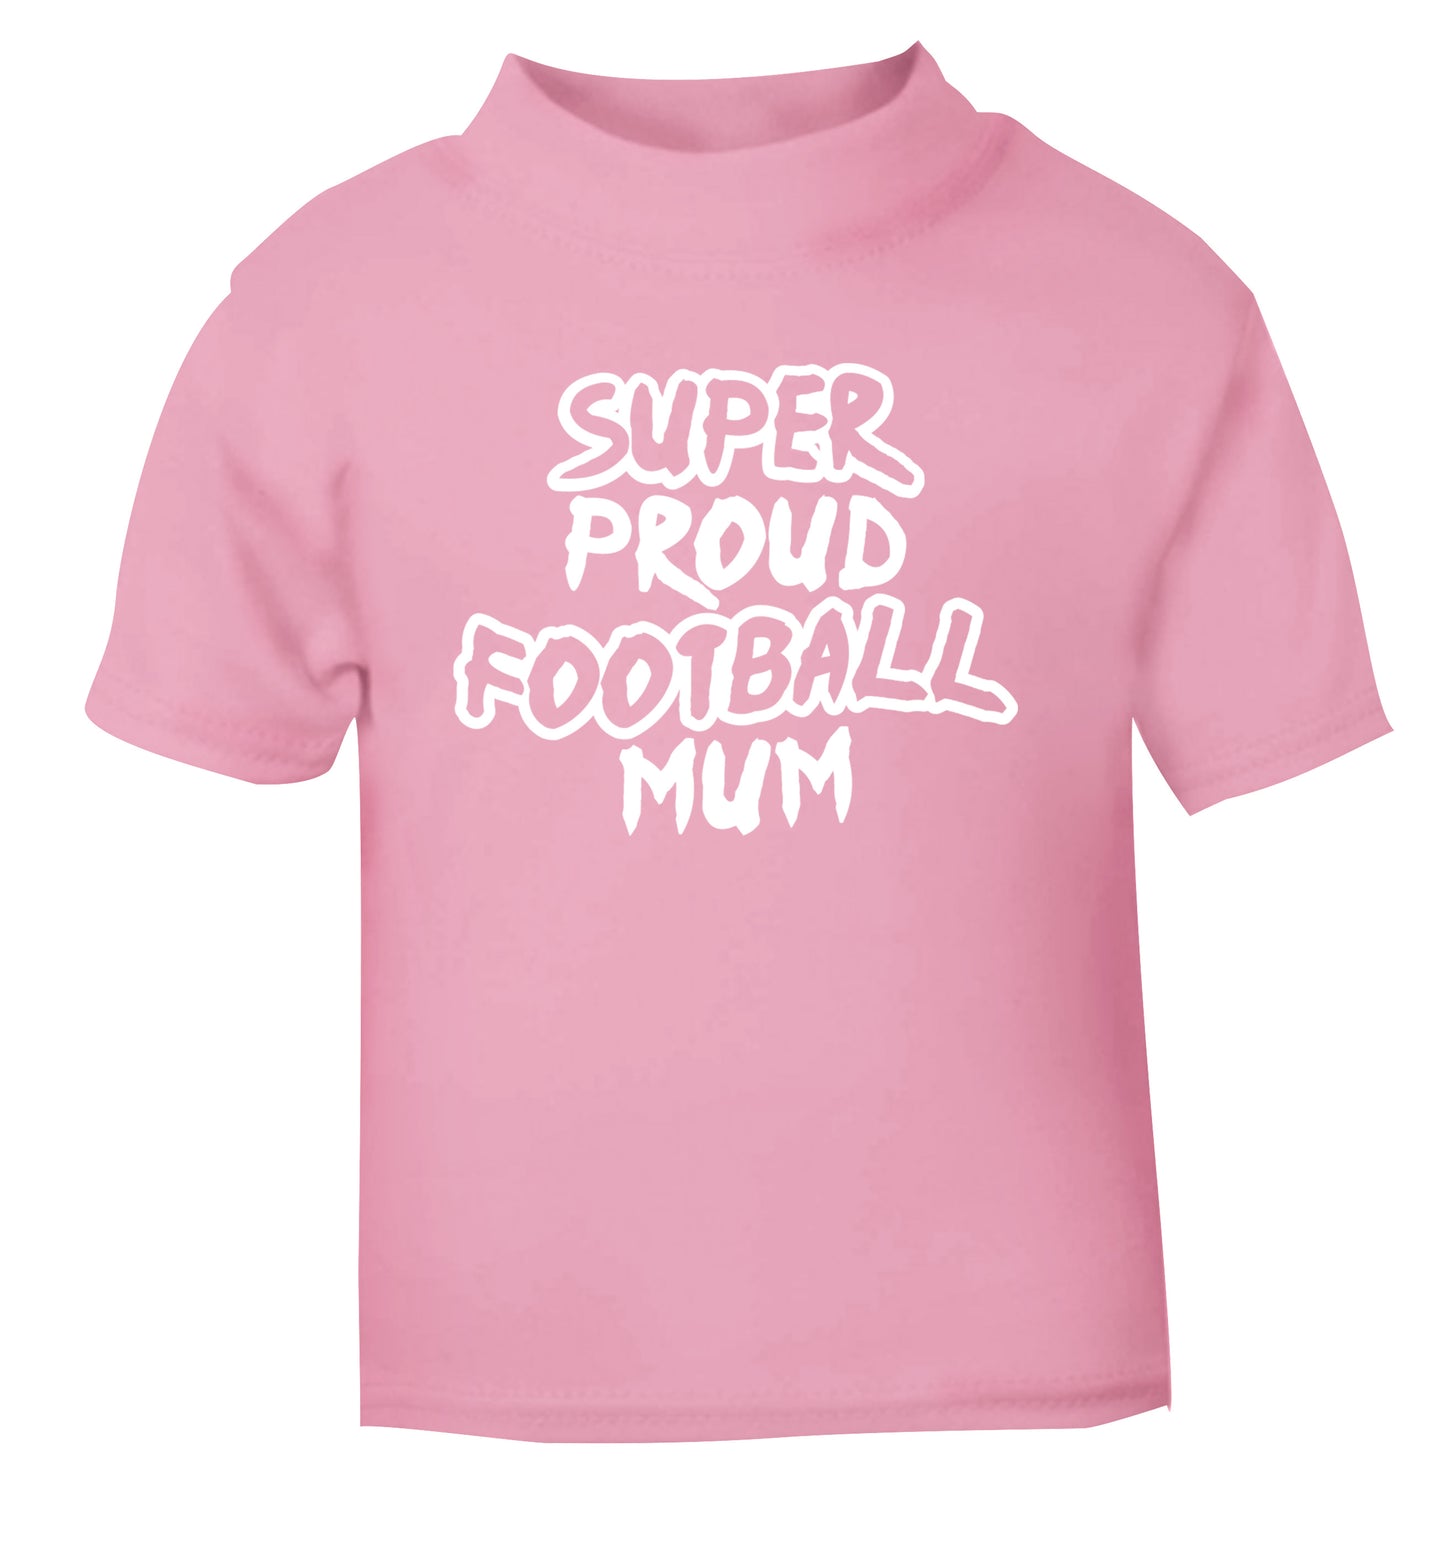 Super proud football mum light pink Baby Toddler Tshirt 2 Years